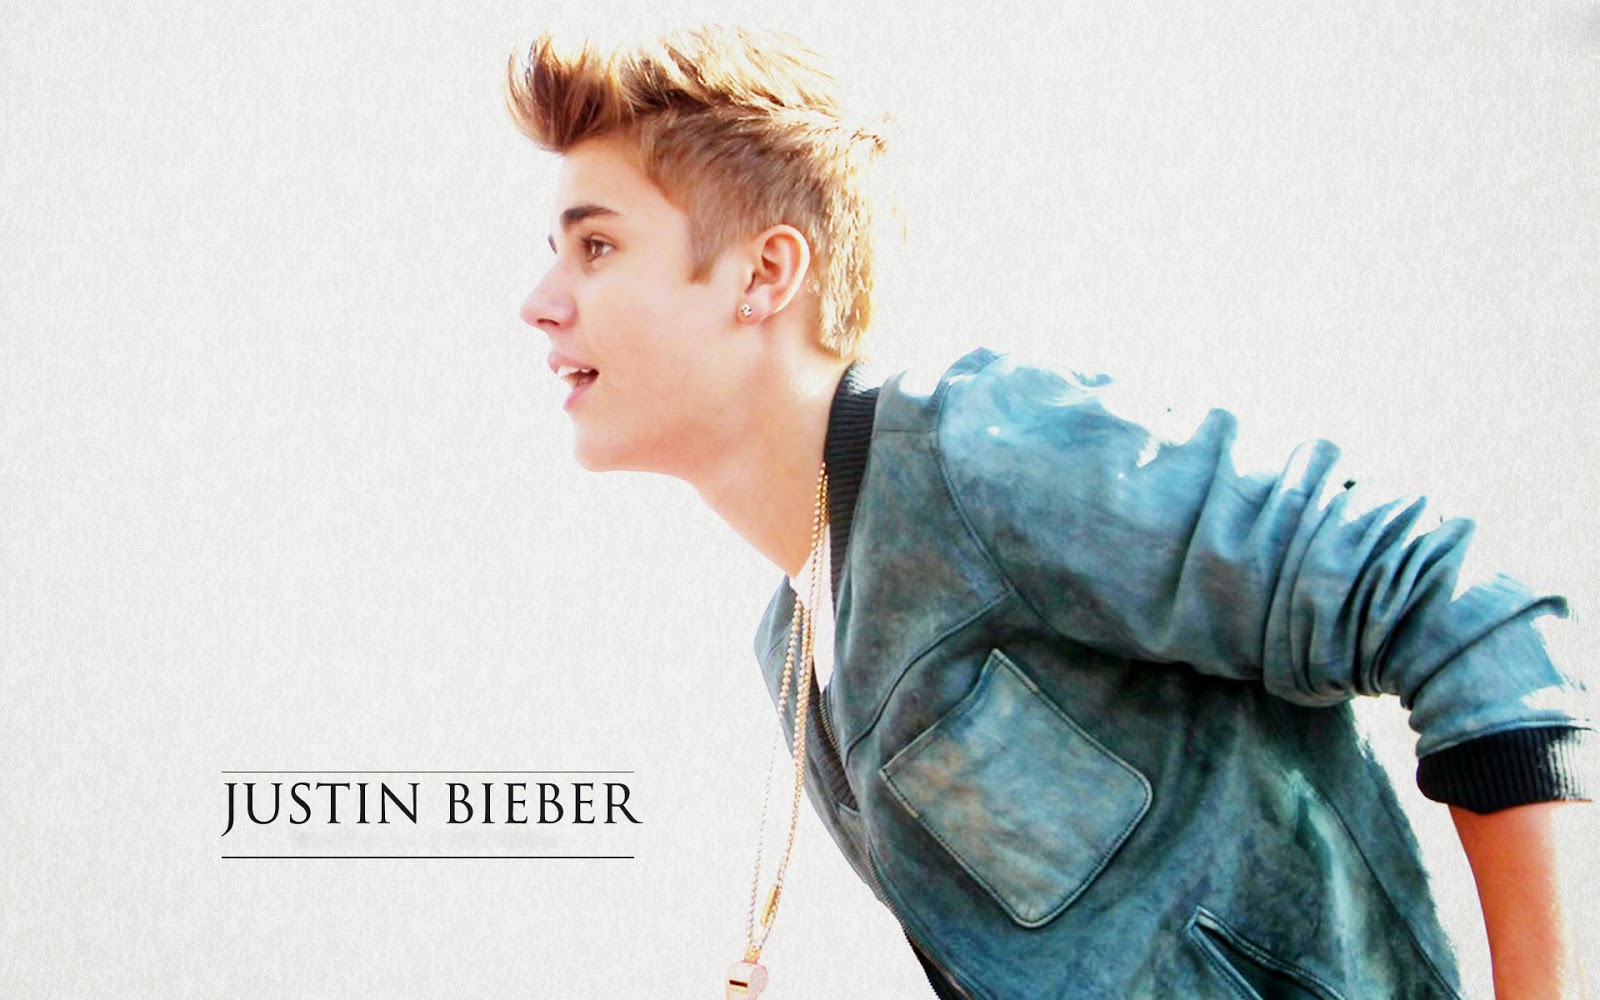 Justin Bieber Wallpaper Hd 2015 - Most Popular Singer In Hollywood -  1600x1000 Wallpaper 